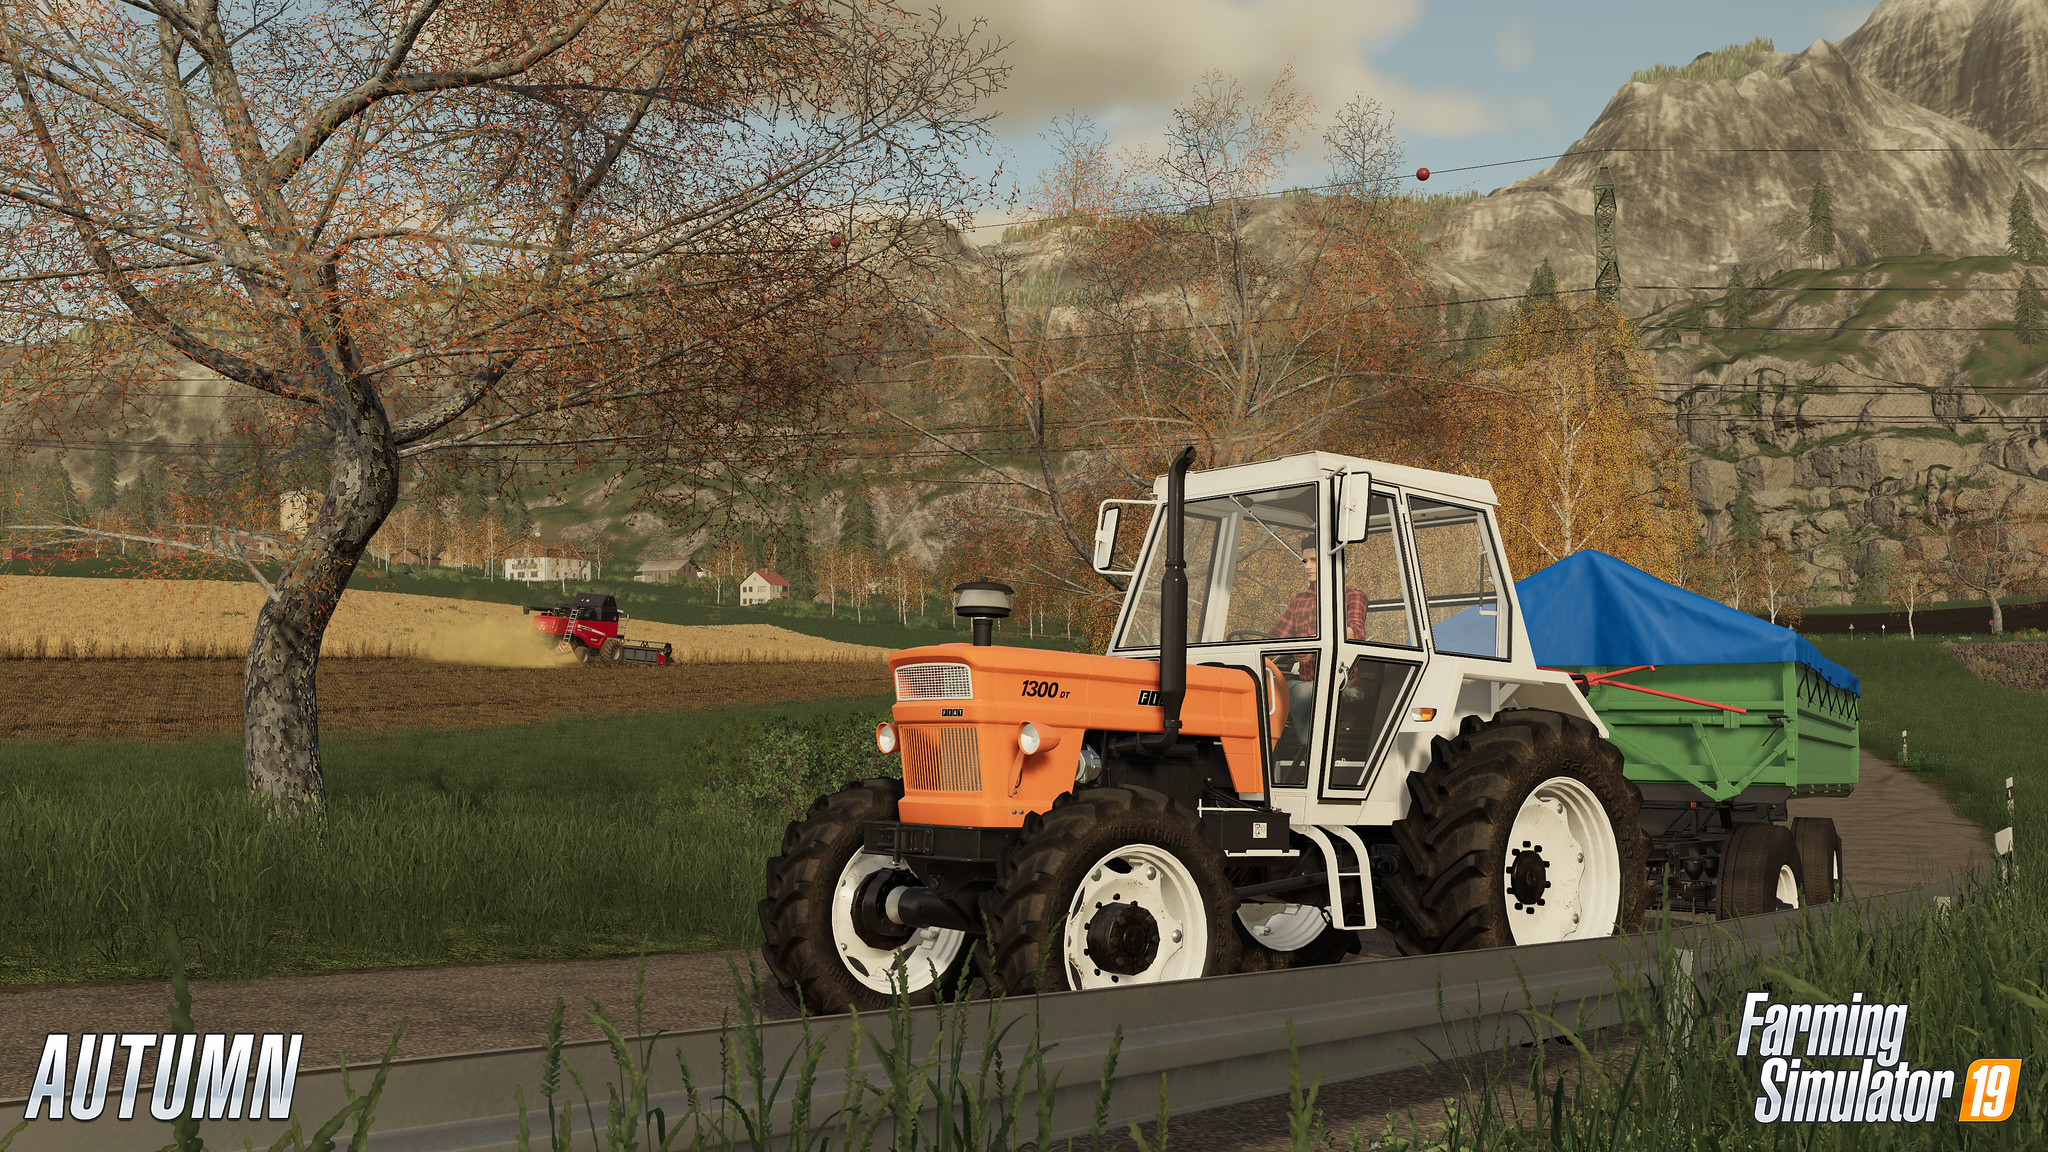 Farming Simulator 19 Adds Seasons Mod to PS4, December 17 – 